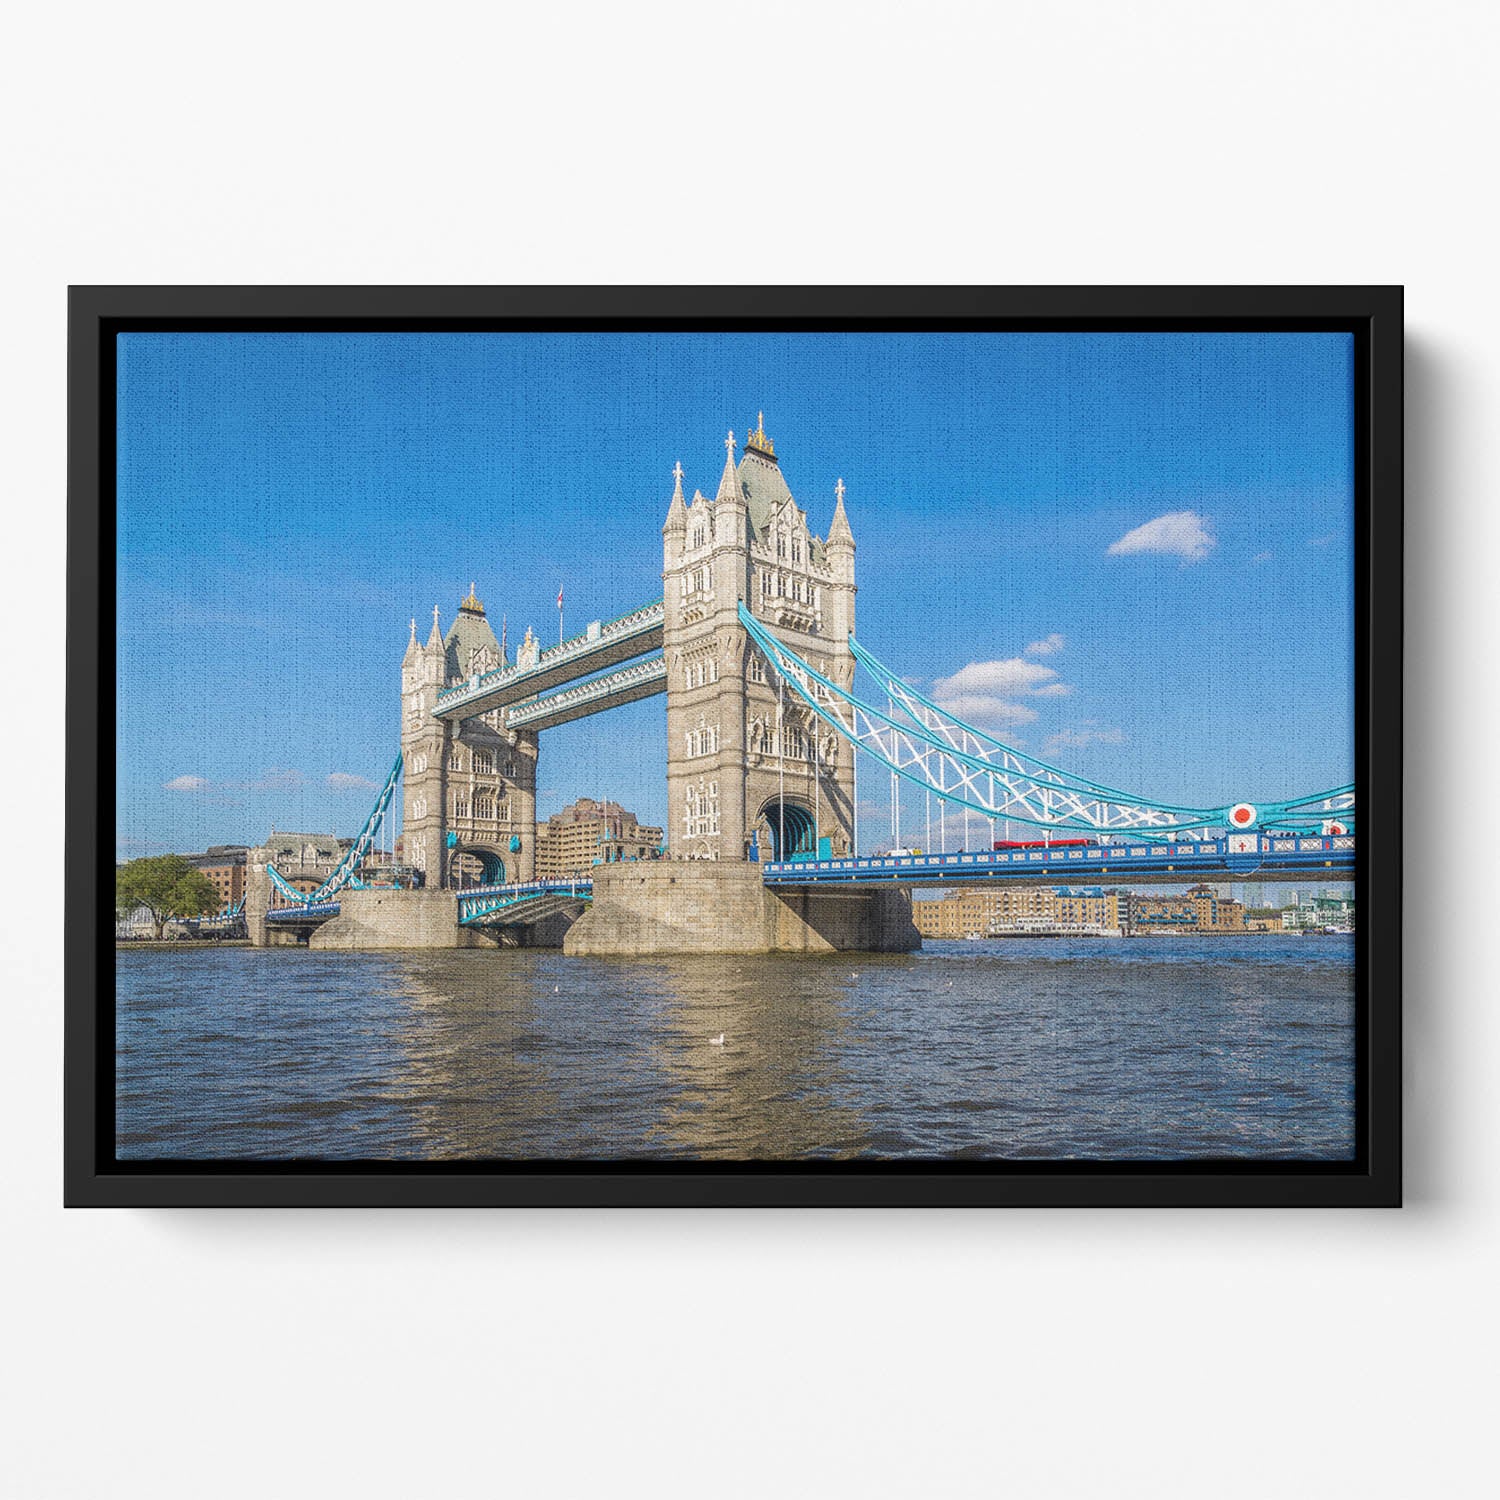 London Tower Bridge Floating Framed Canvas